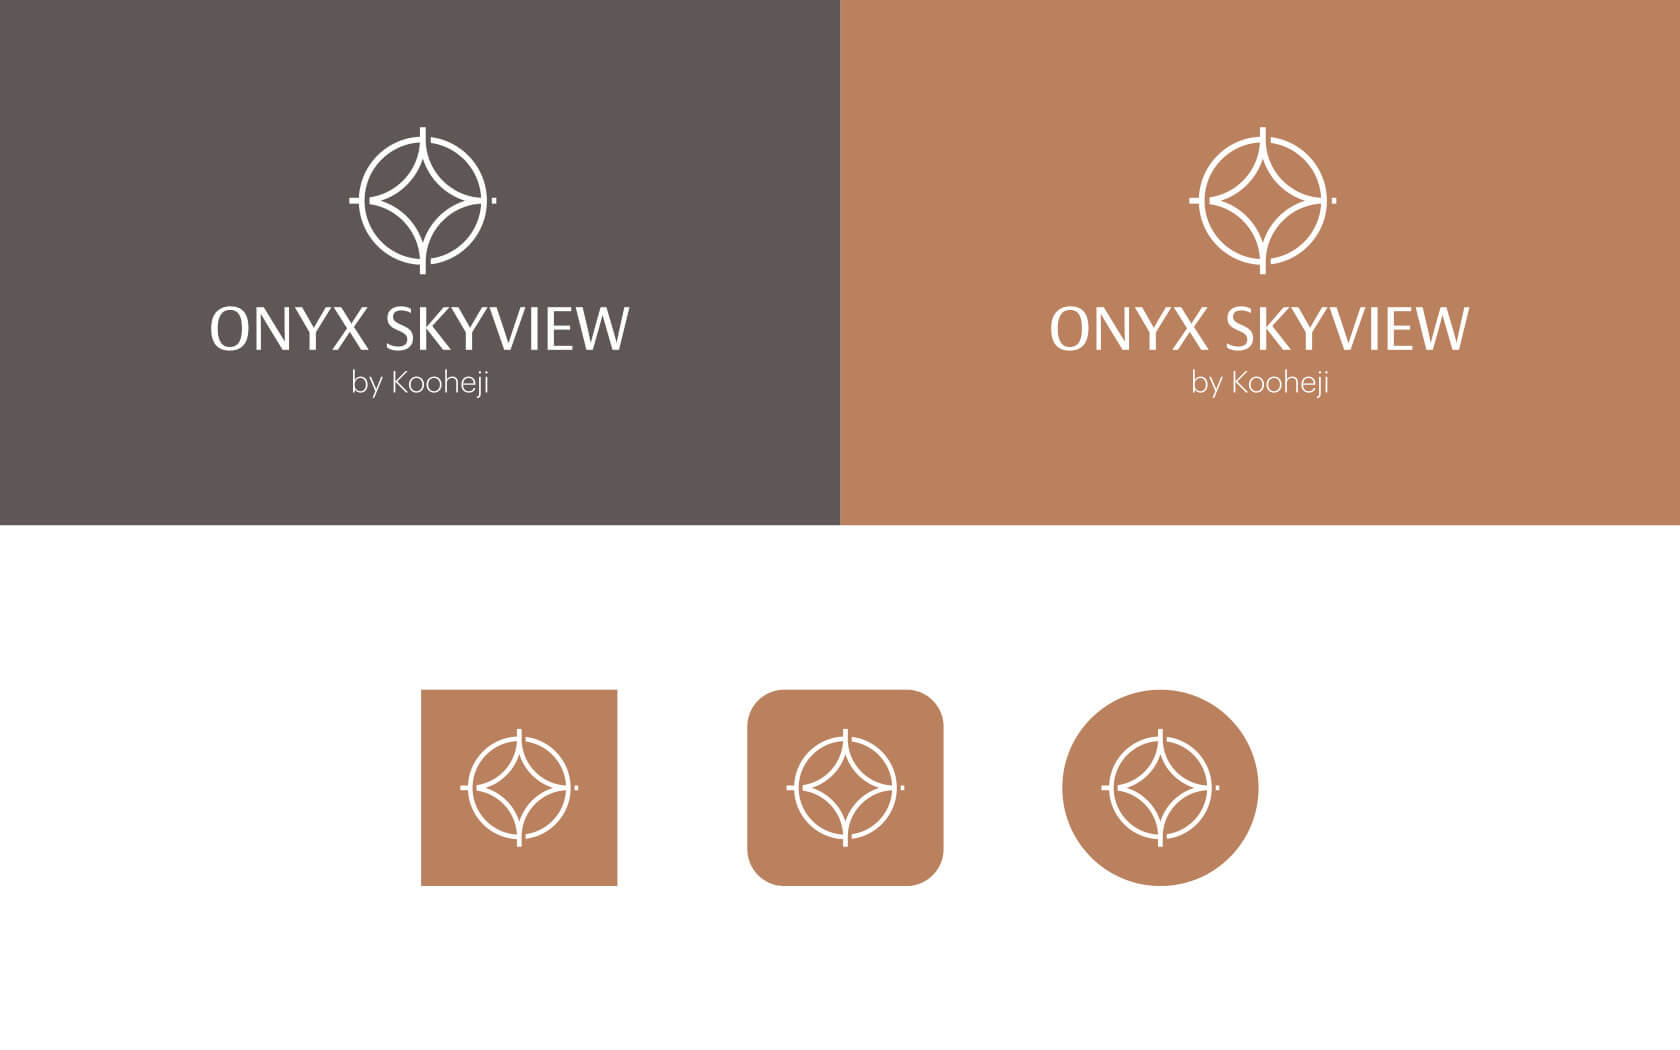 Onyx Skyview logo variant and Avatar